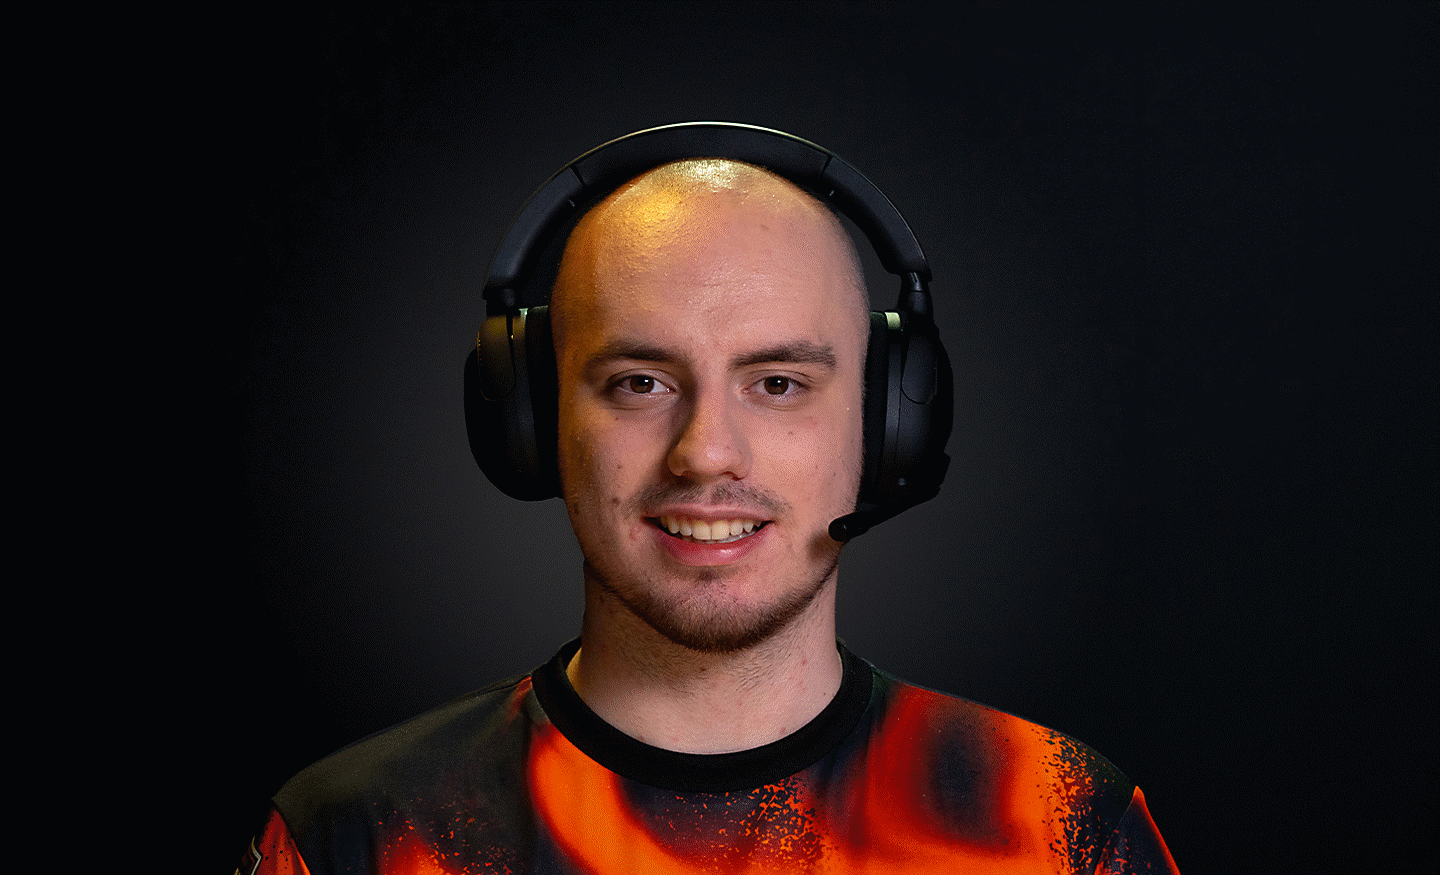 Profilna slika igrača Derke na kojoj nosi par crnih slušalica INZONE H5